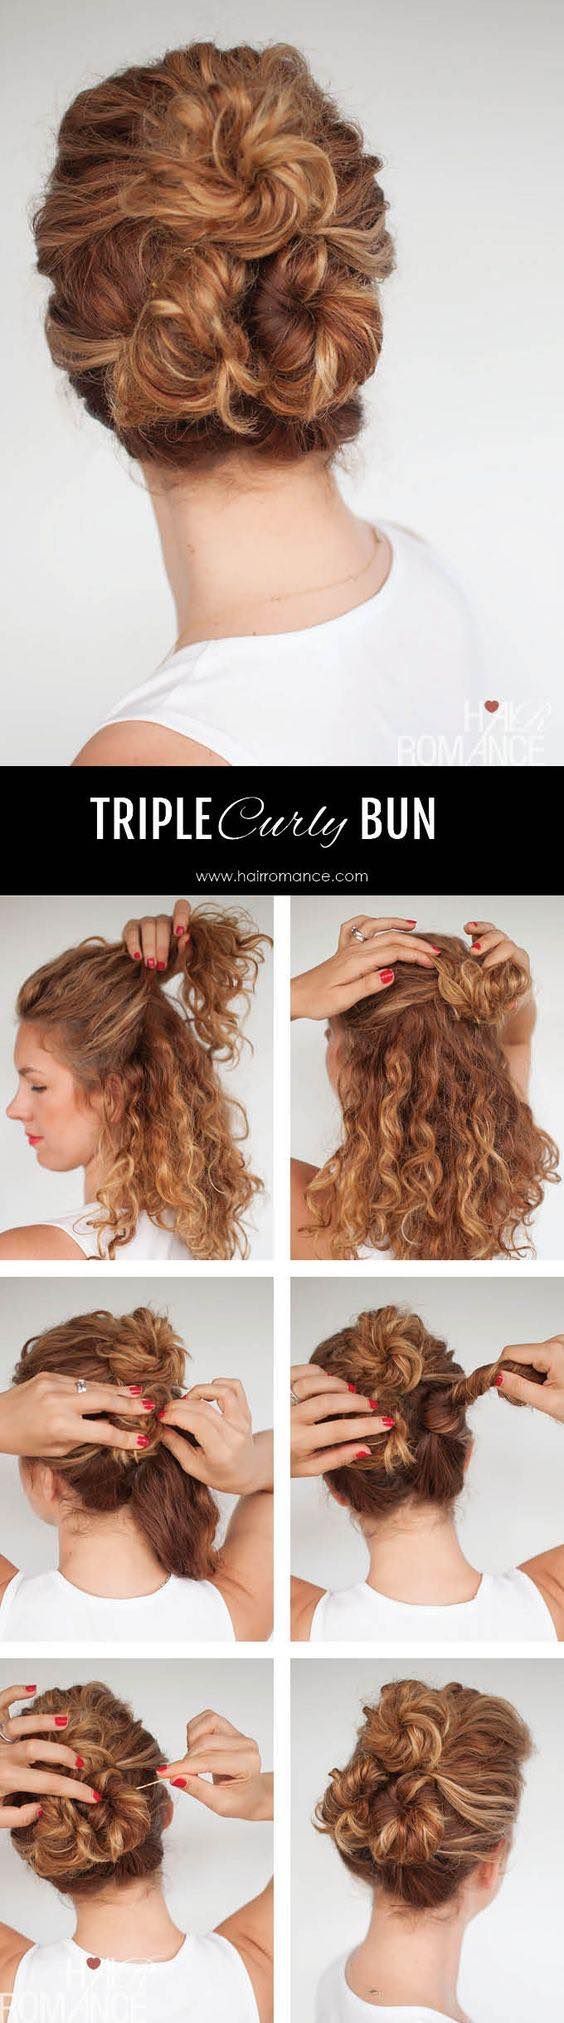 curly triple bun wedding hairstyle tutorials